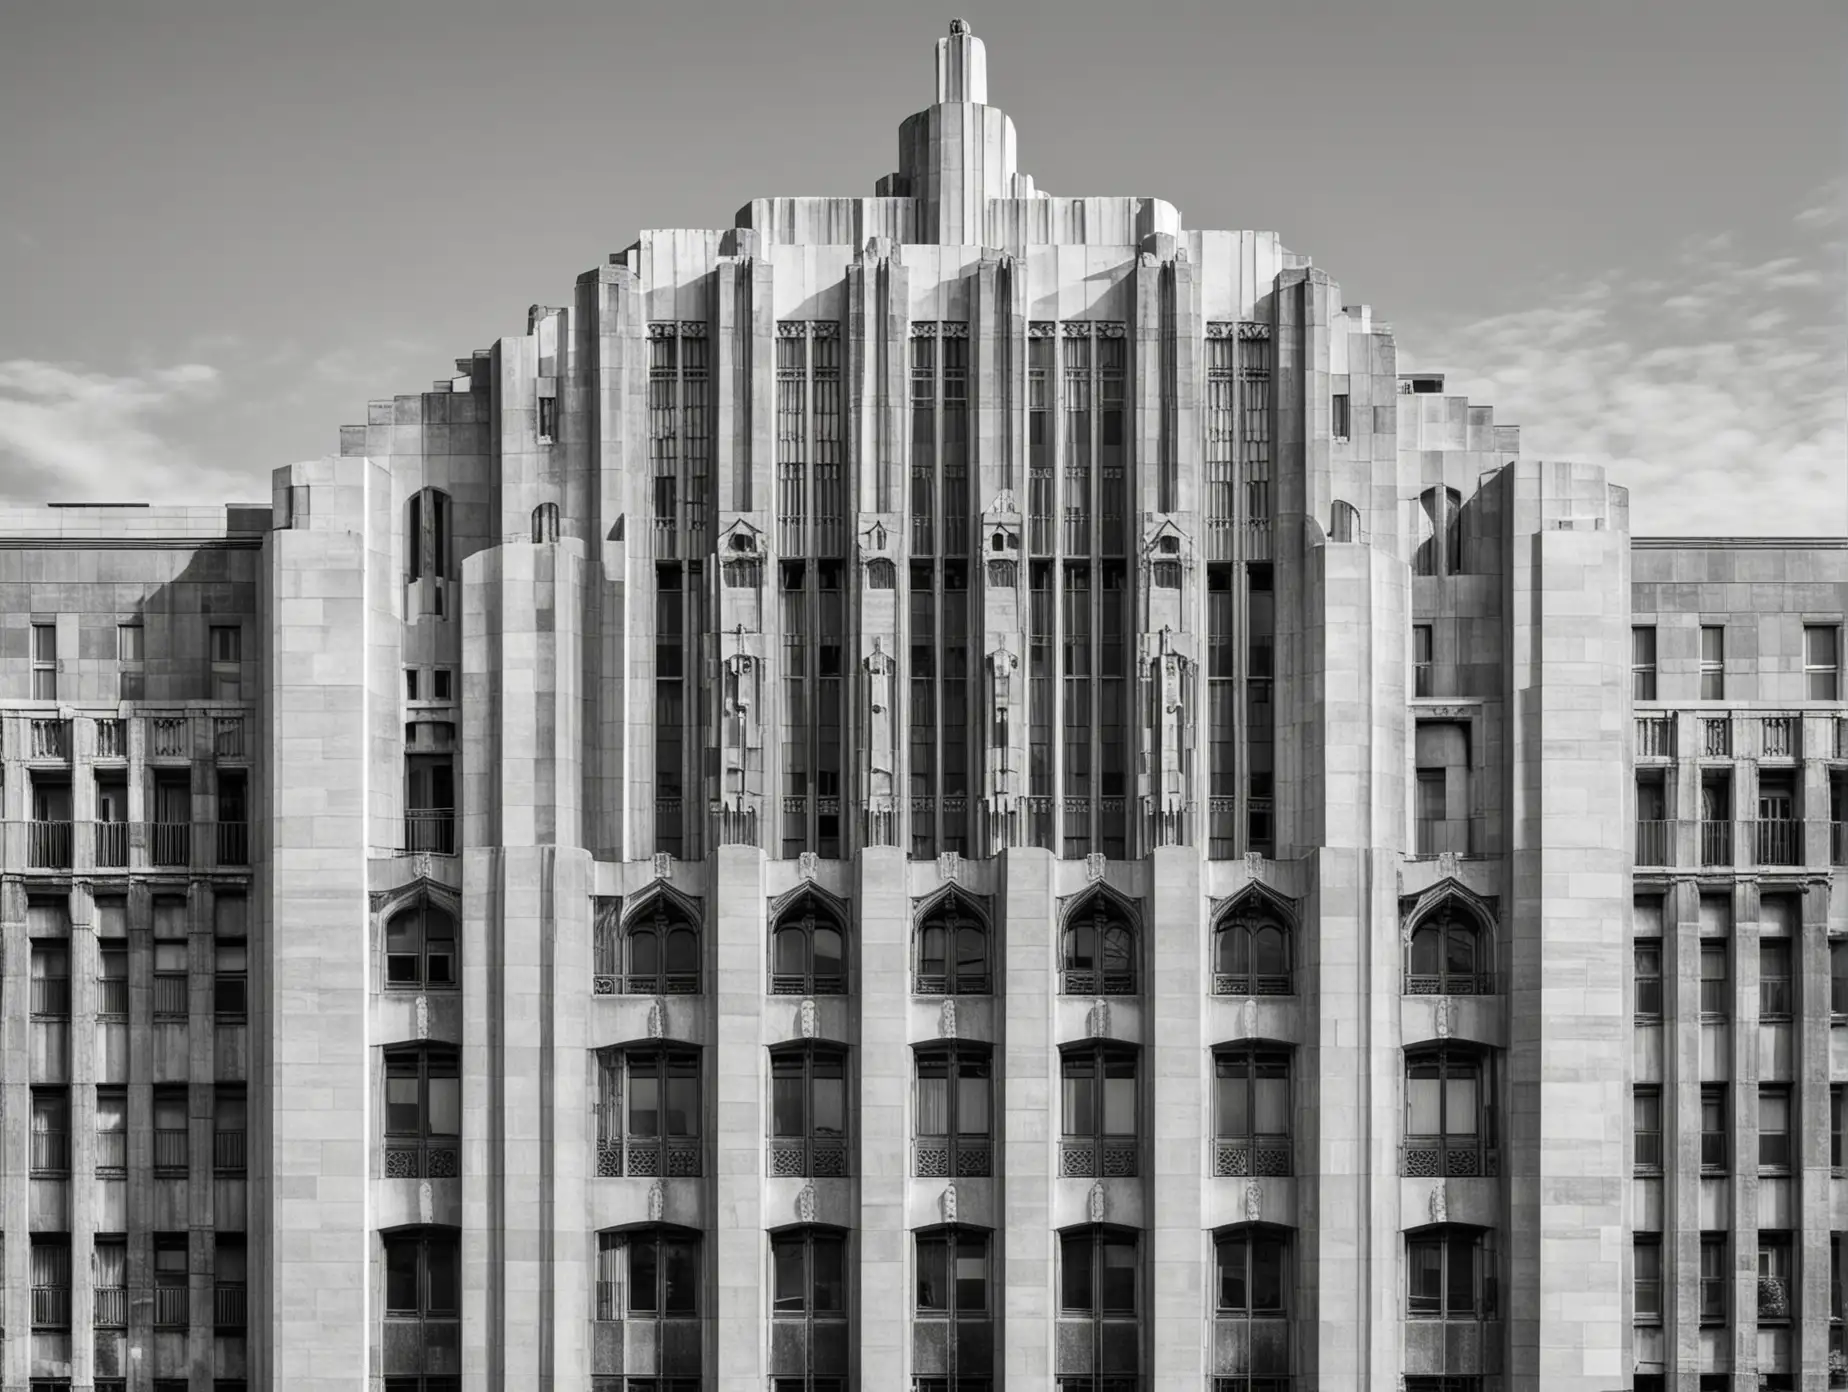 Monochrome Art Deco Architecture in a large city